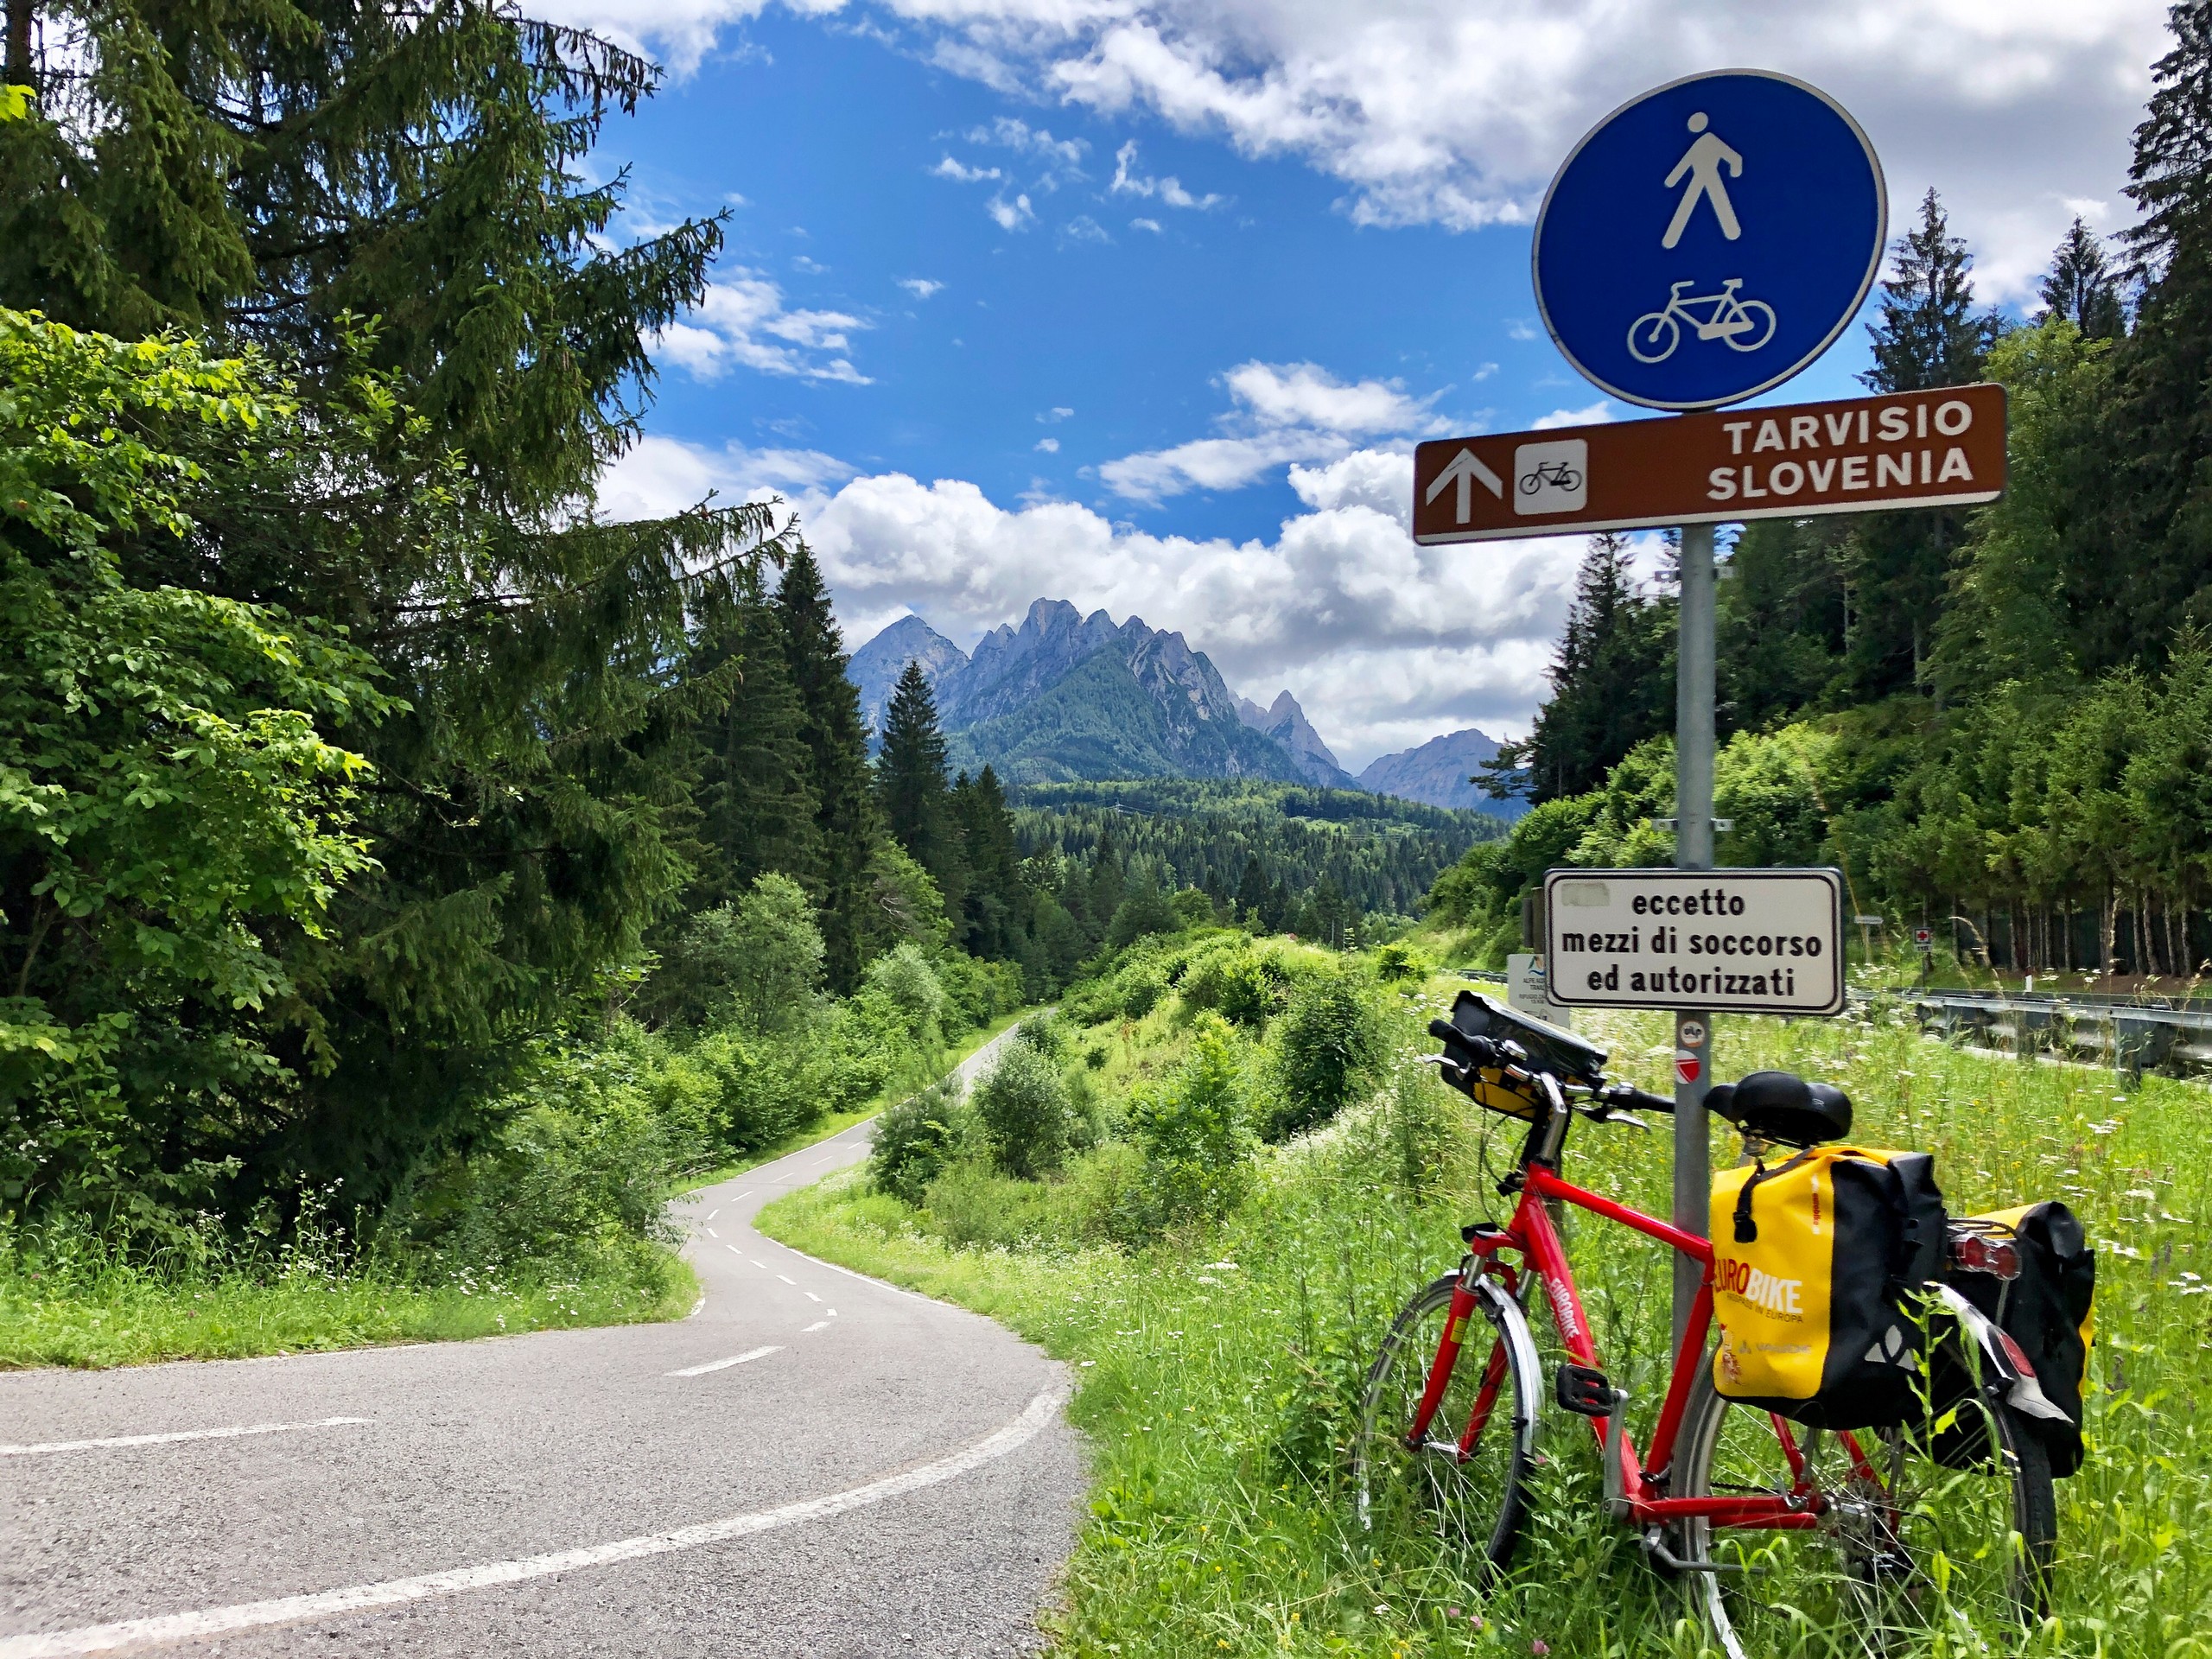 Approaching the Slovenias border on Alpe Adria trail